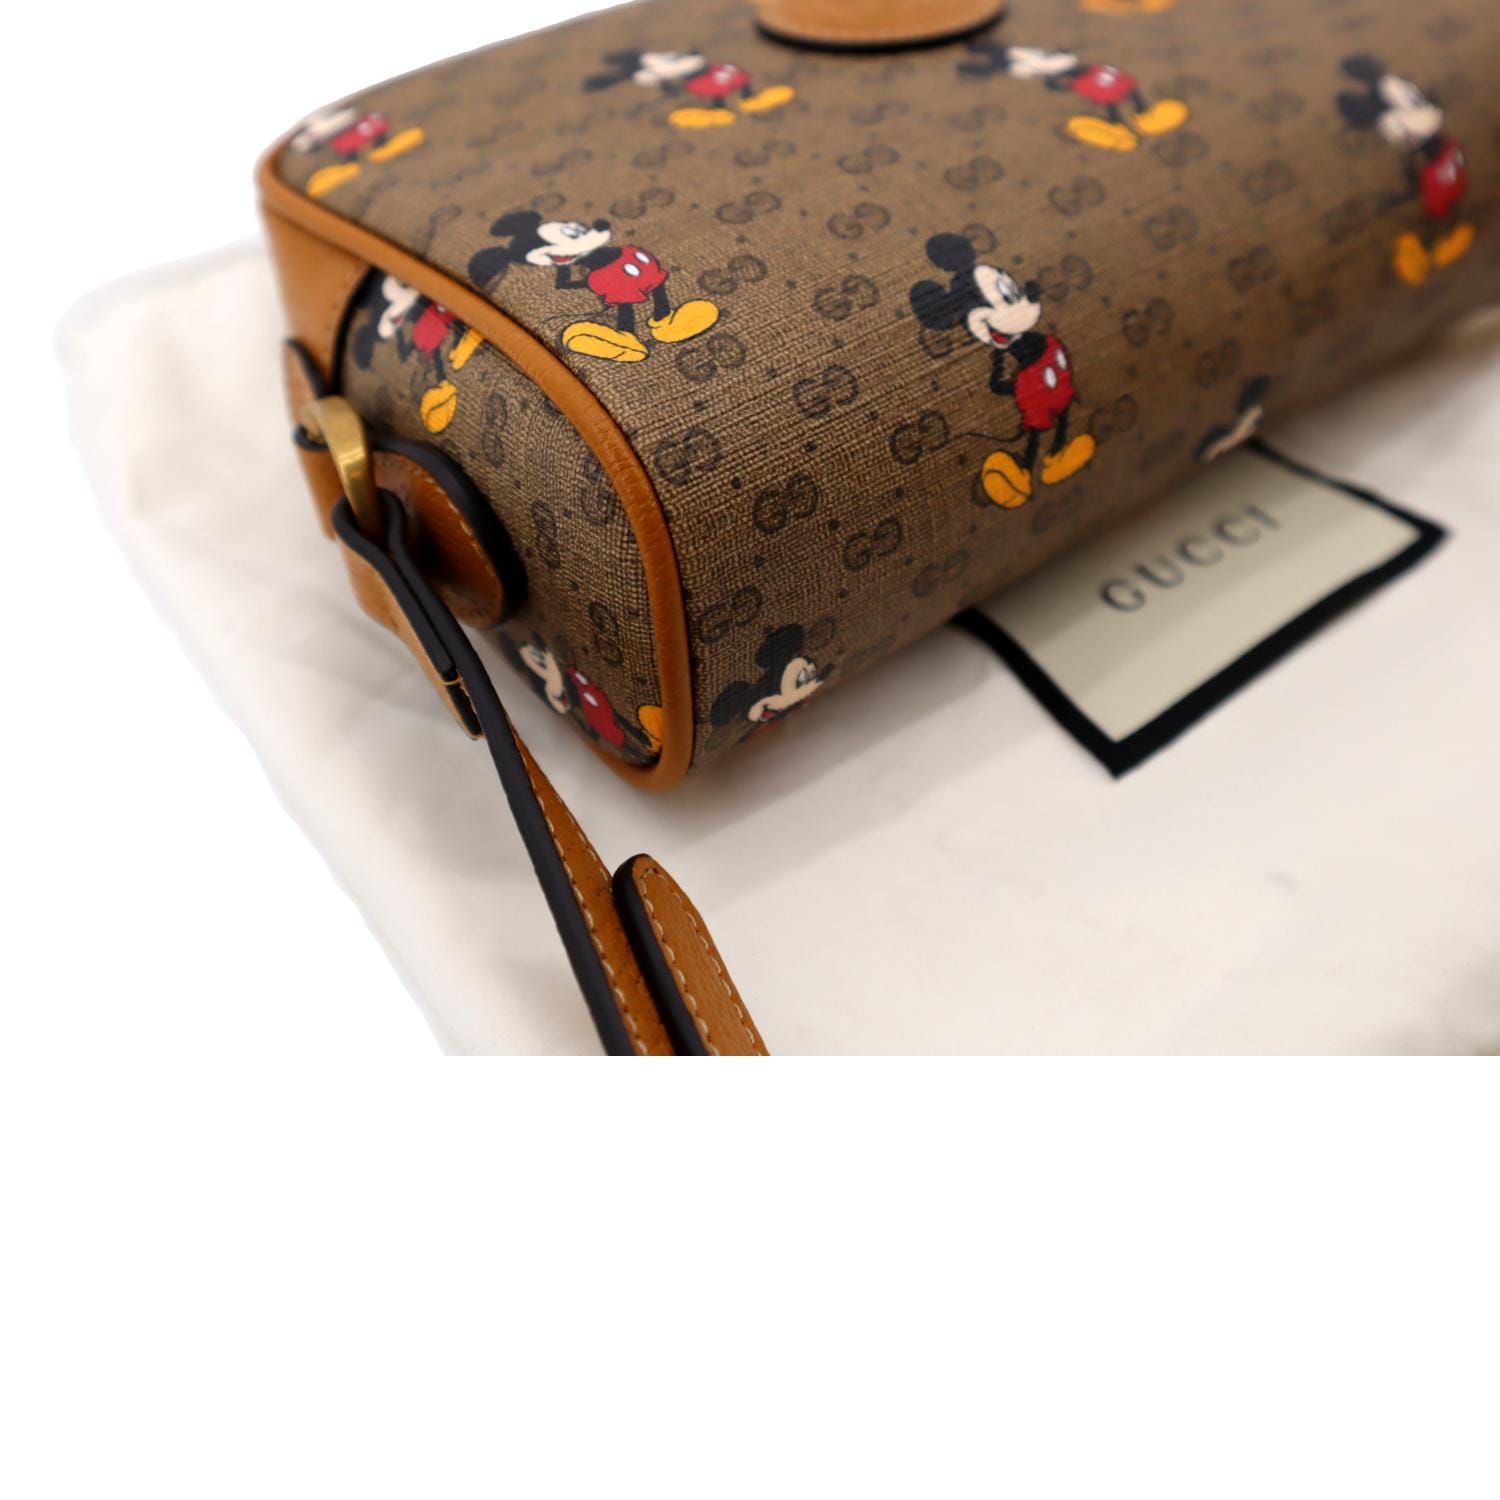 Gucci GG Shoulder Bag DISNEY X GUCCI Mickey Mouse Collaboration